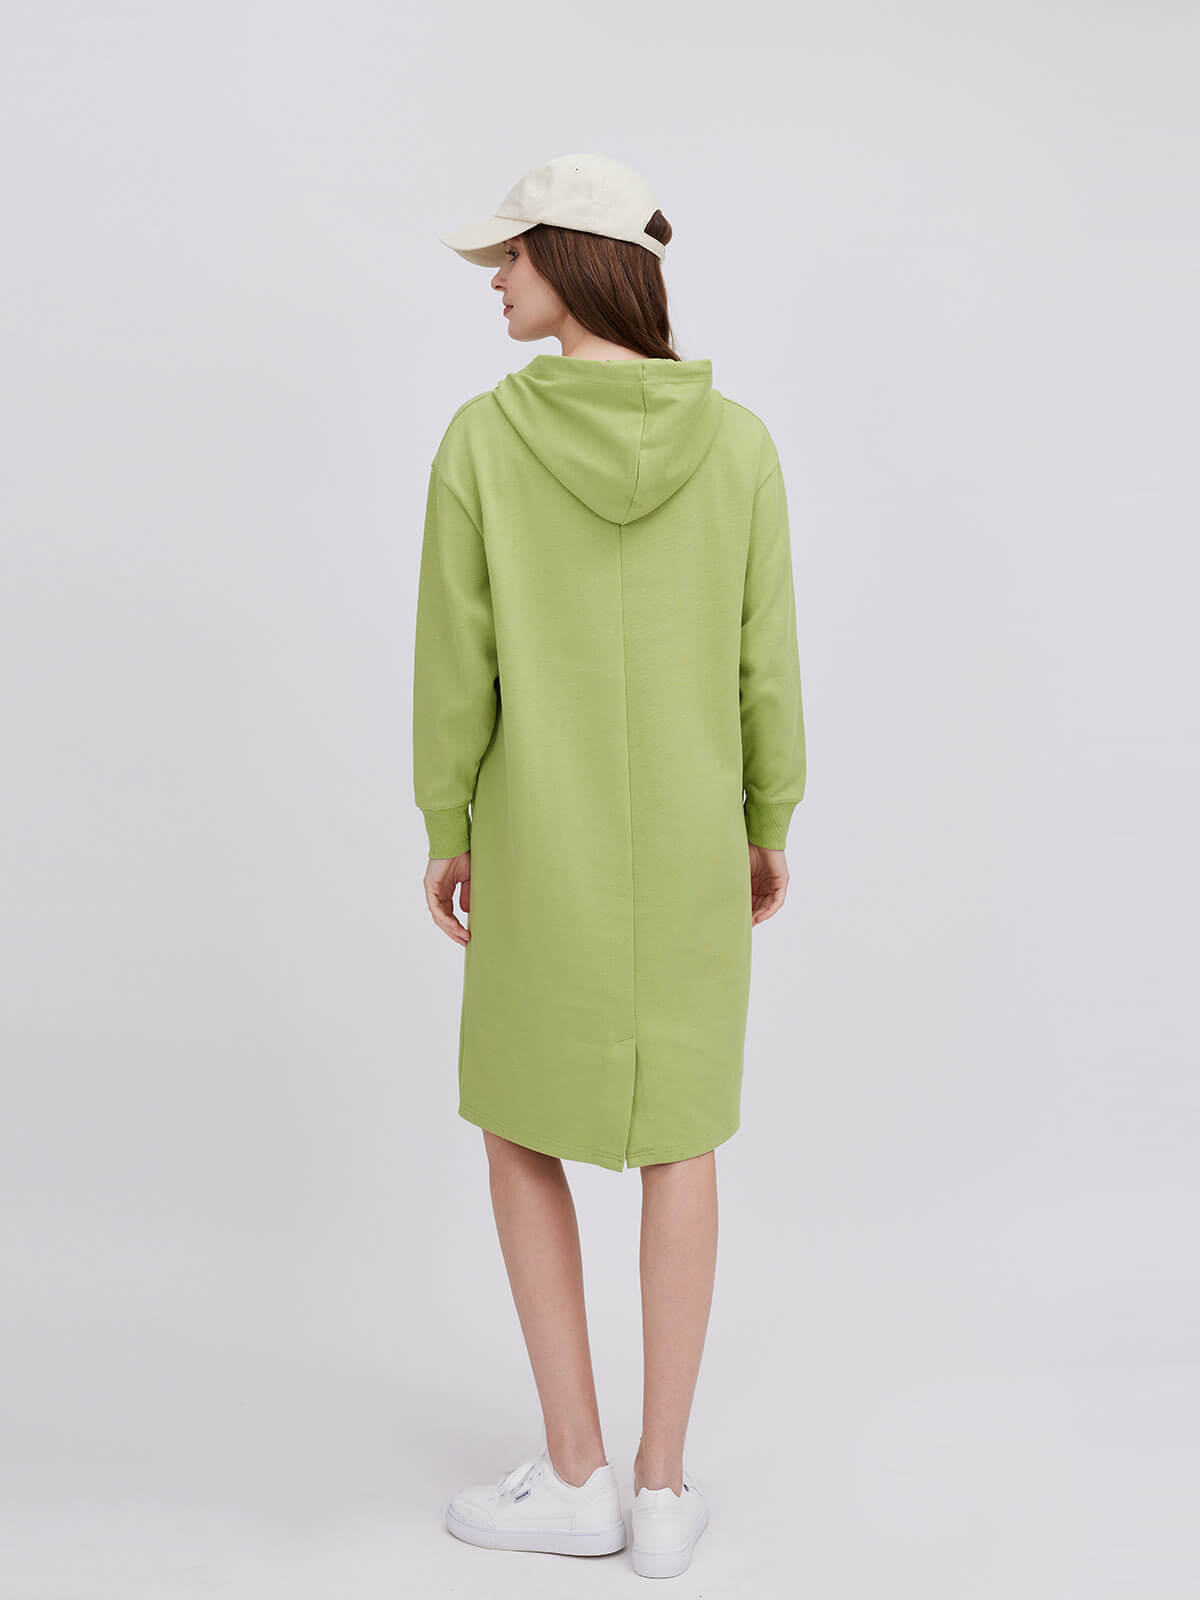 ASOBIO Women Green Sweatshirt Hooded Dress